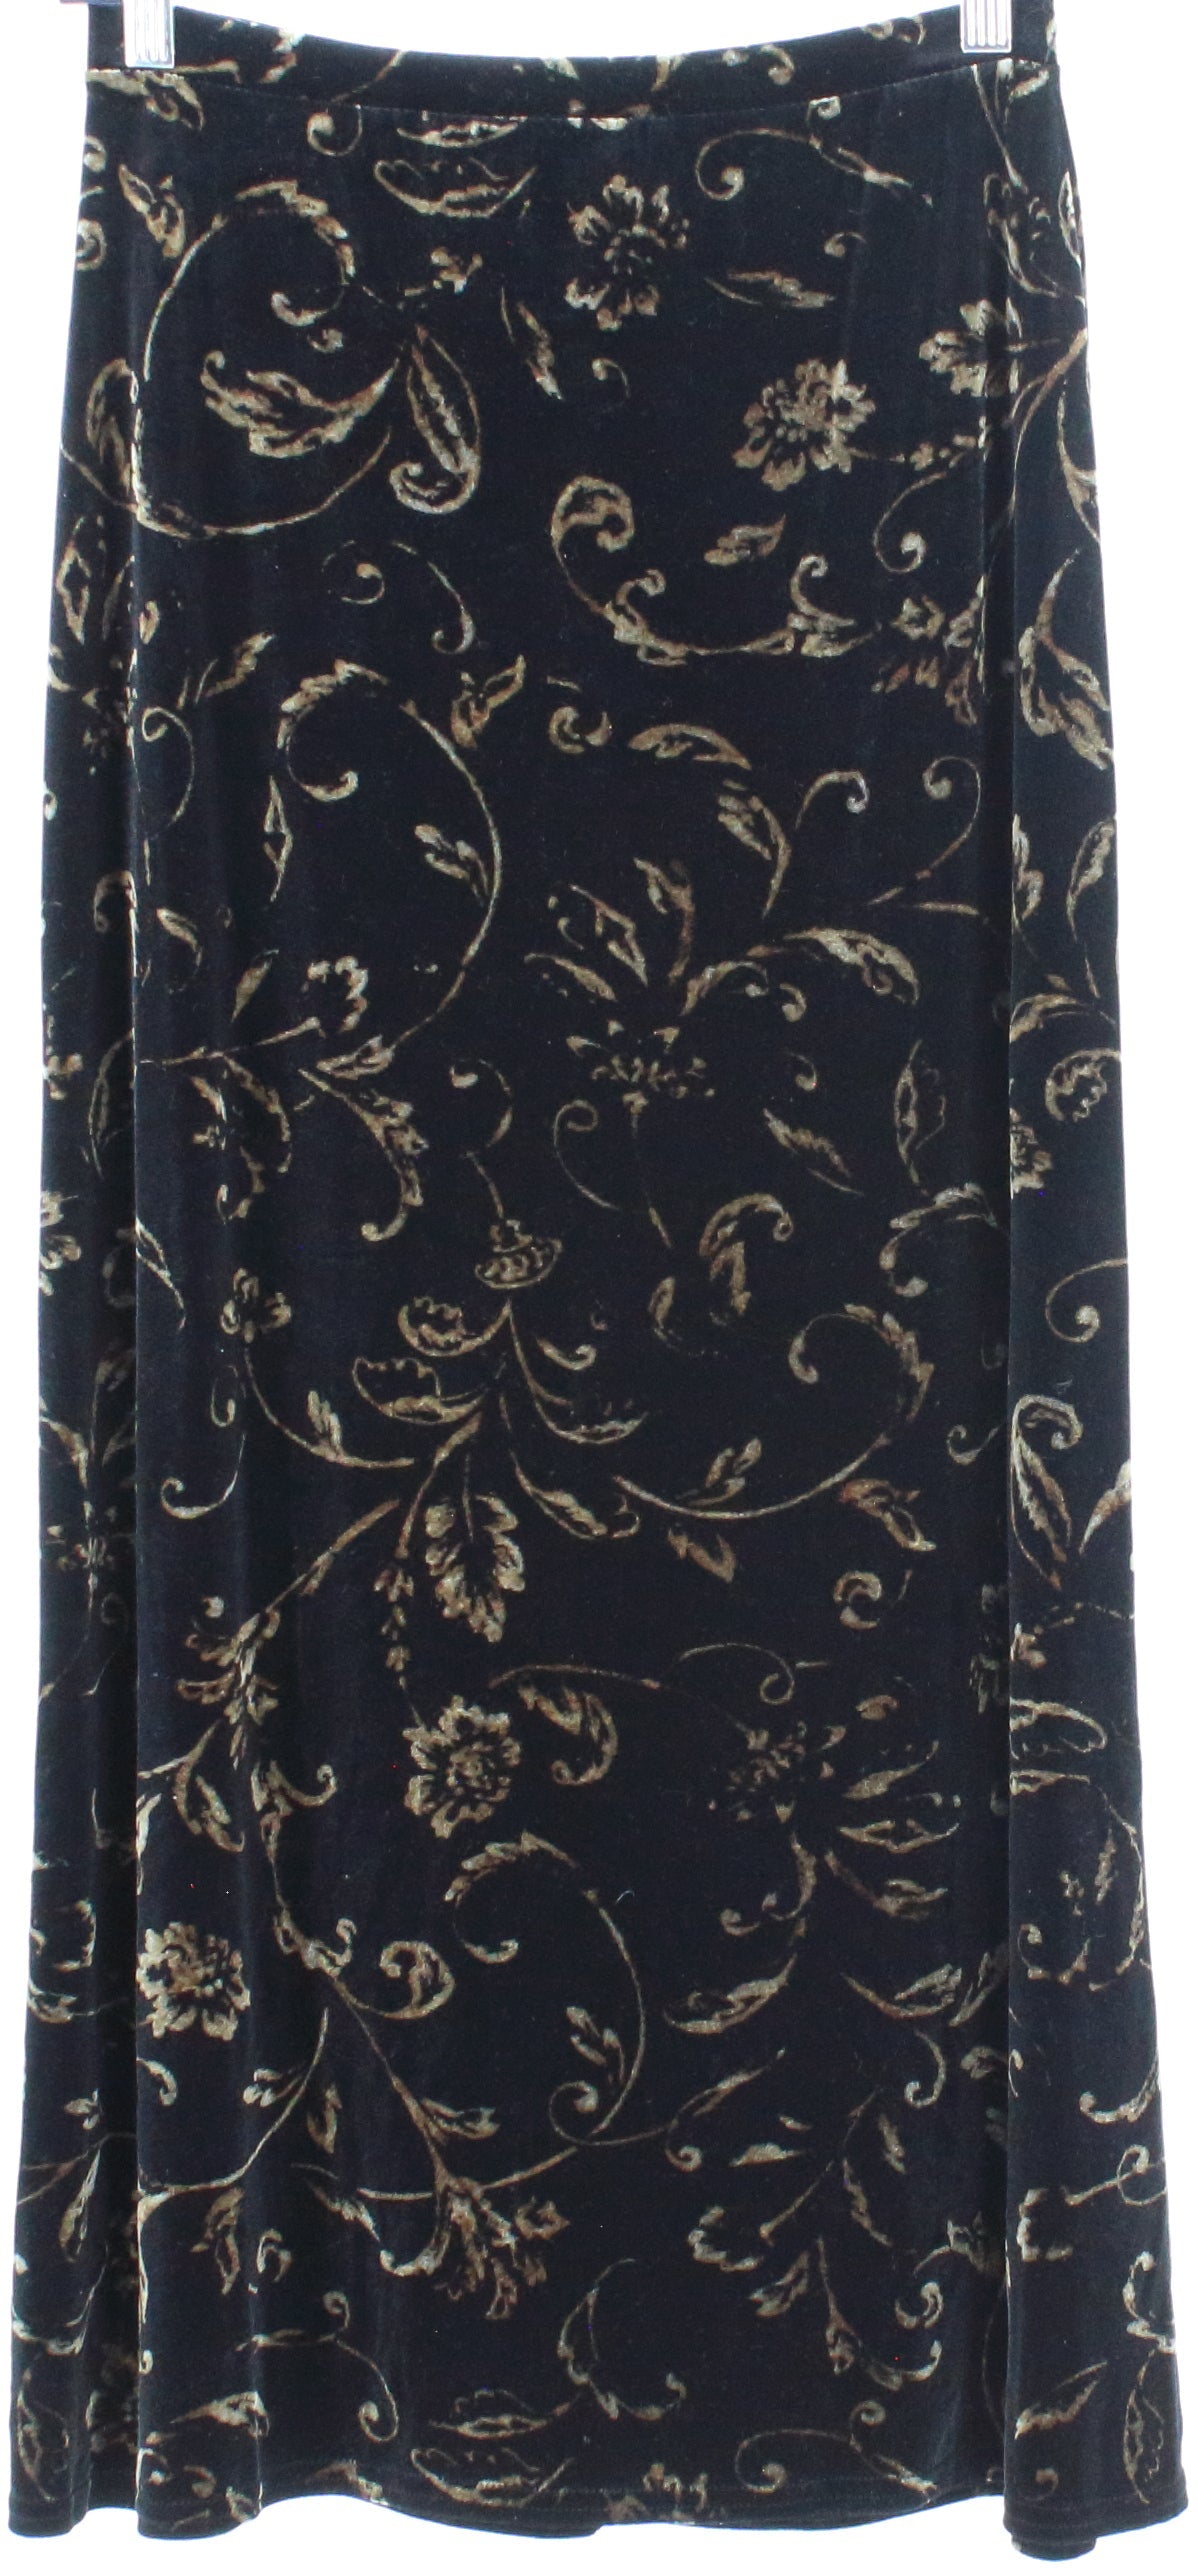 Kathie Lee Collection Black and Gold Print Velvet Long Skirt